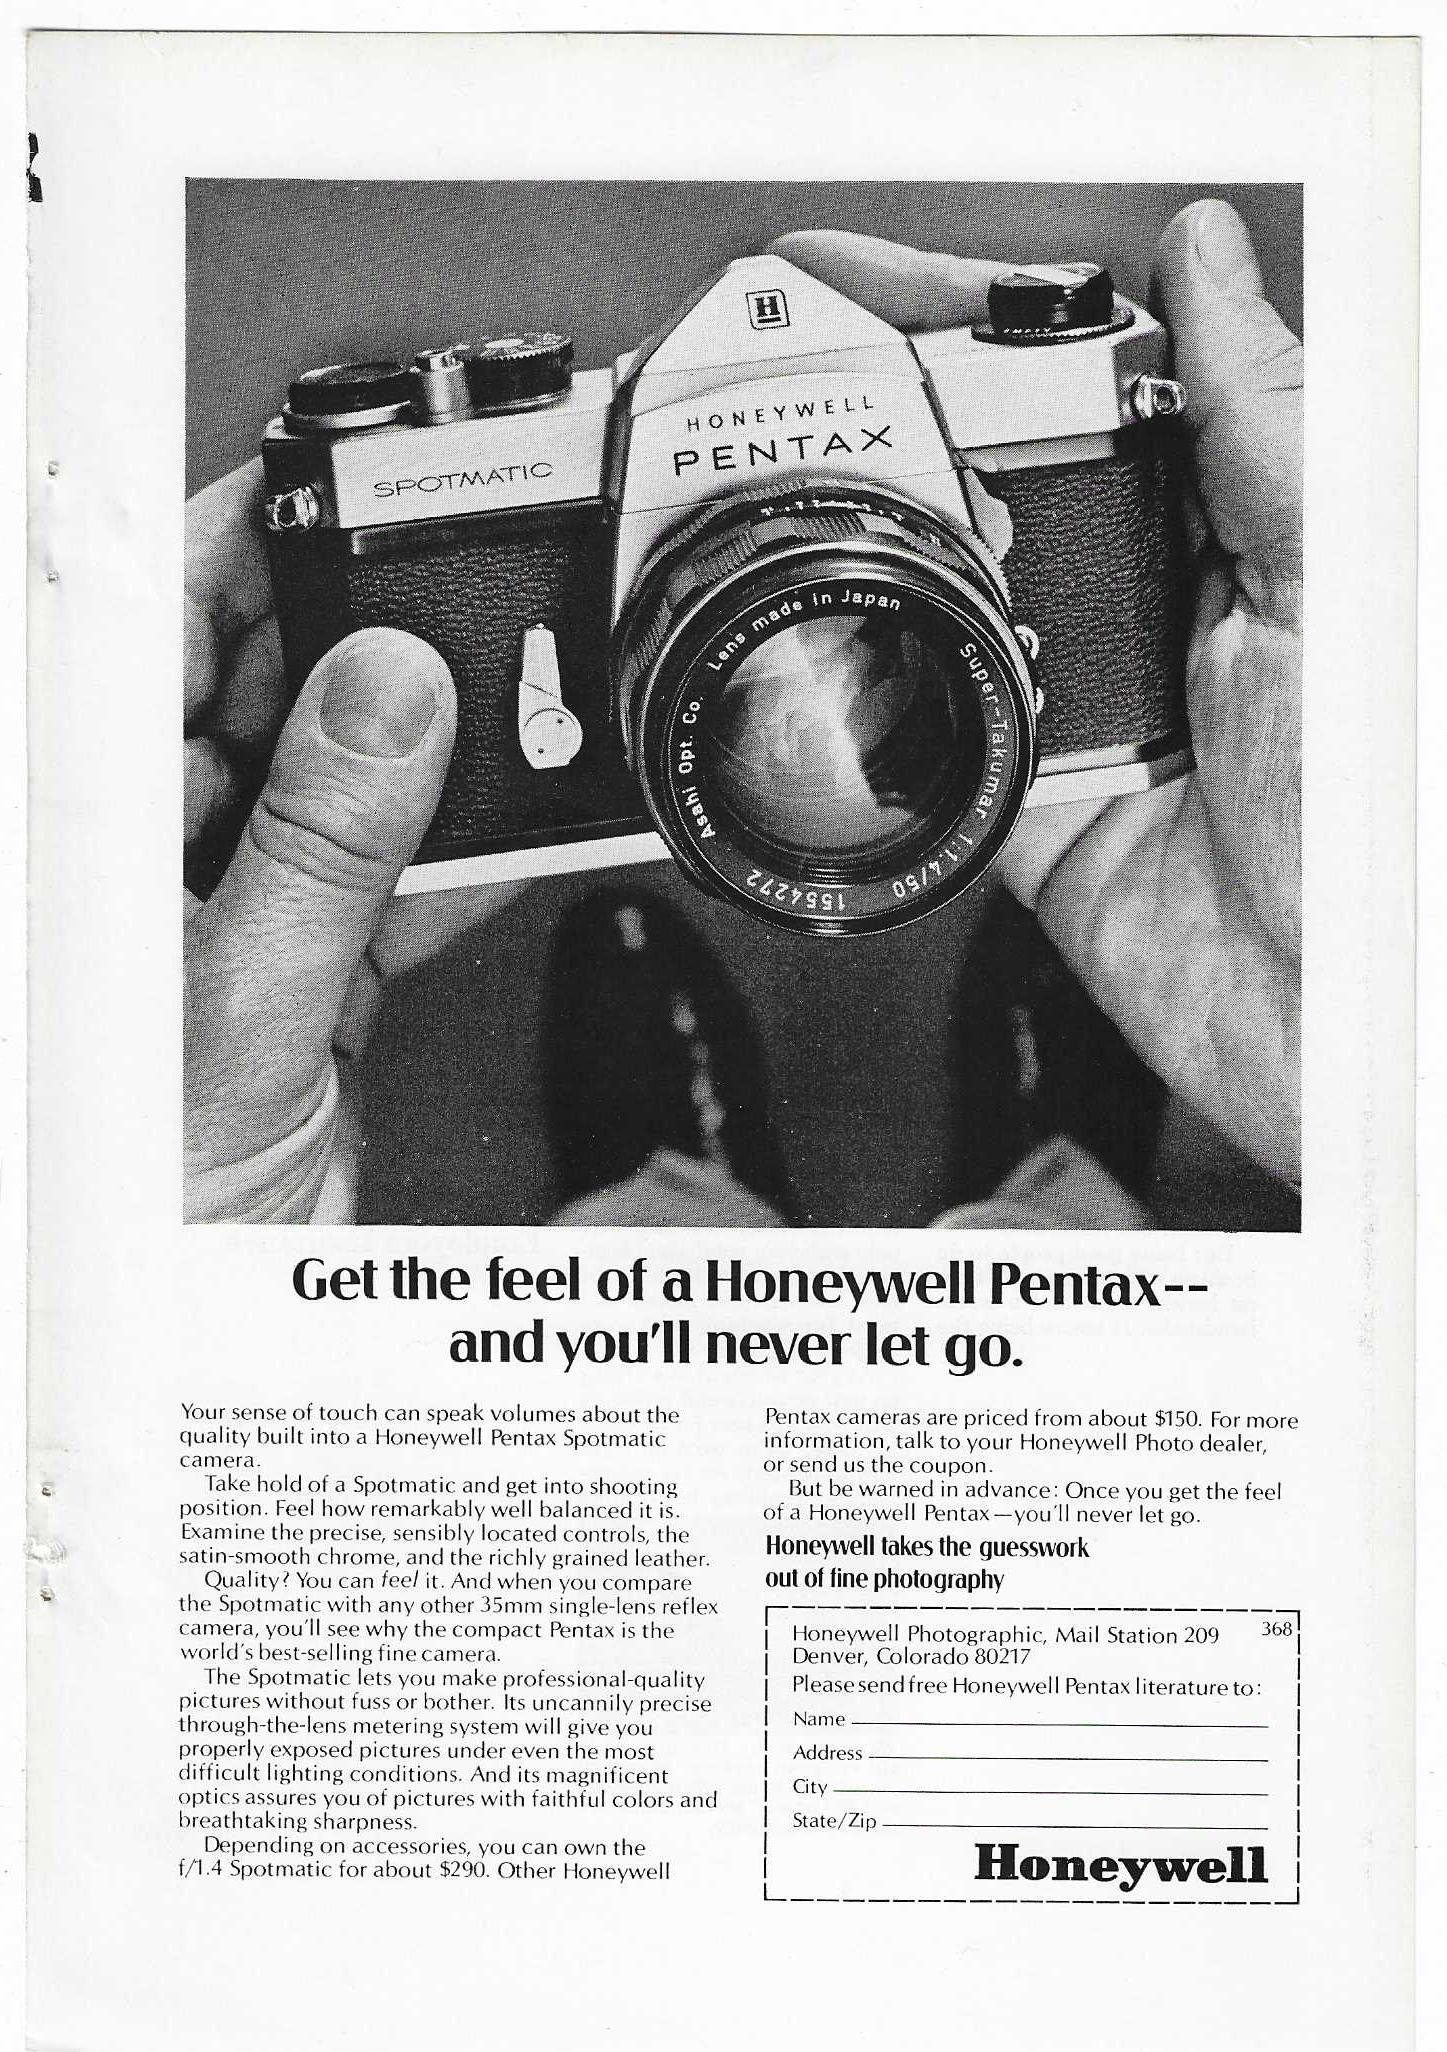 Original 1969 Full Page Magazine Advertisement for HONEYWELL